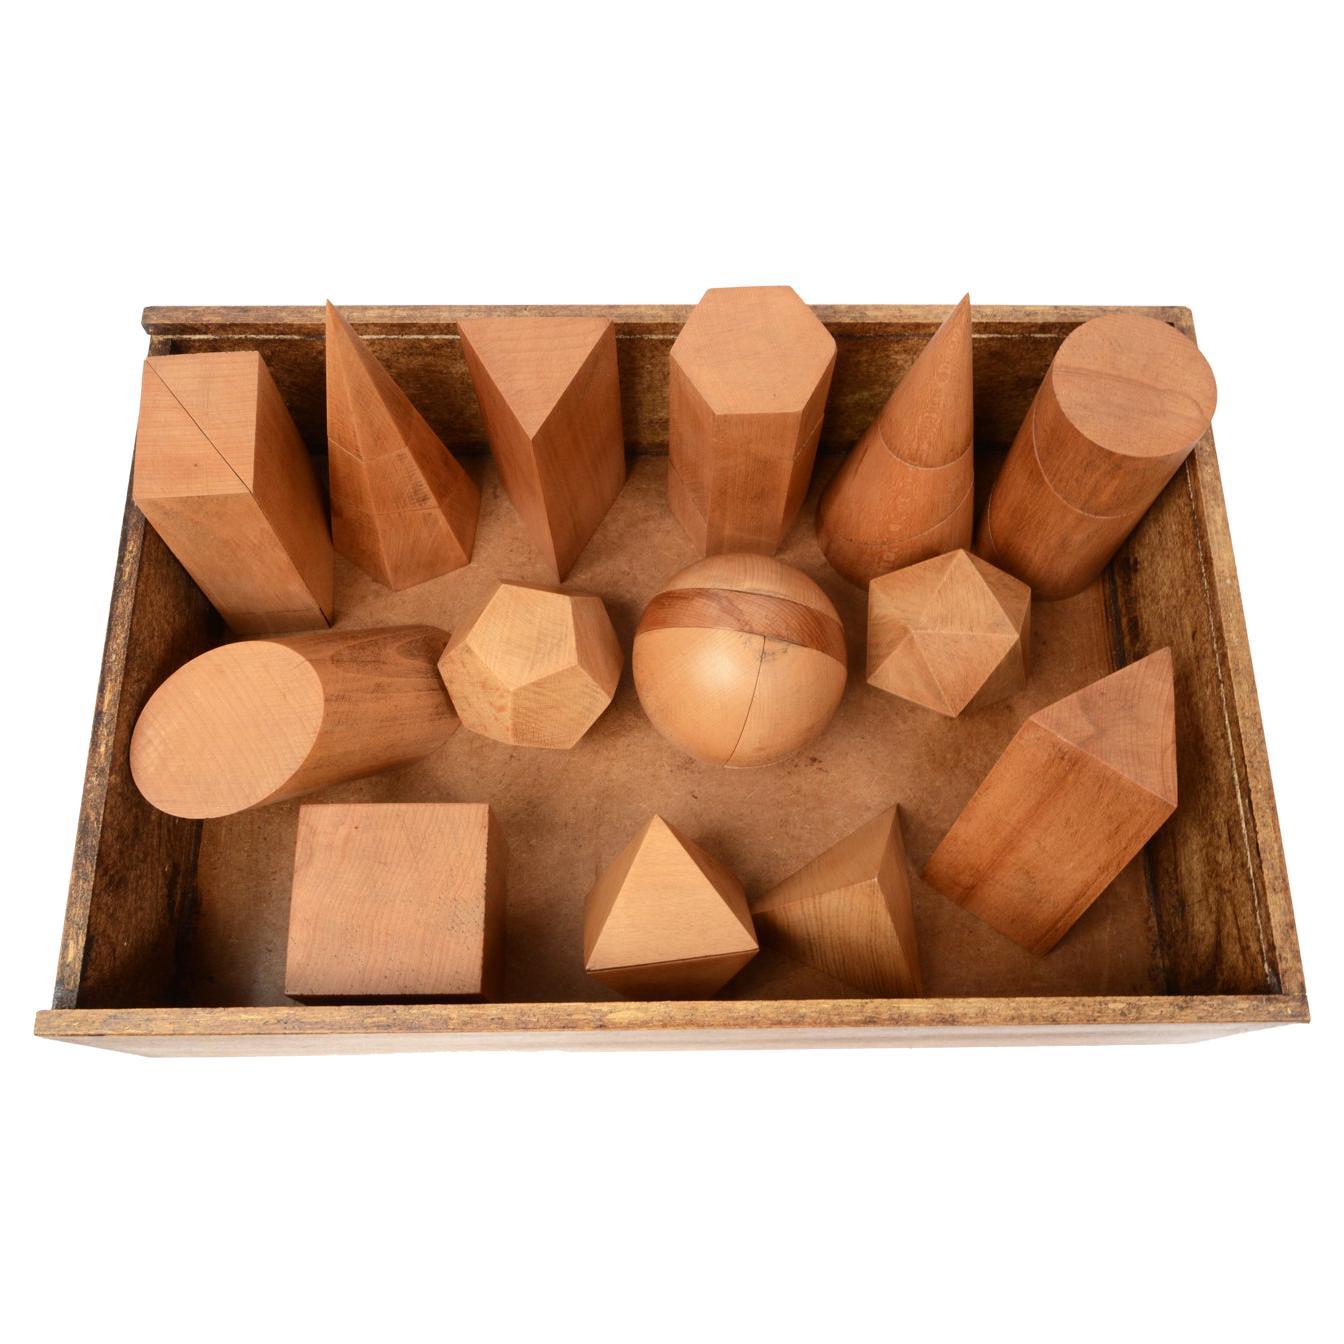 Box Containing 14 Dismountable Wooden Geometric Solids Italy Vallardi, 1963